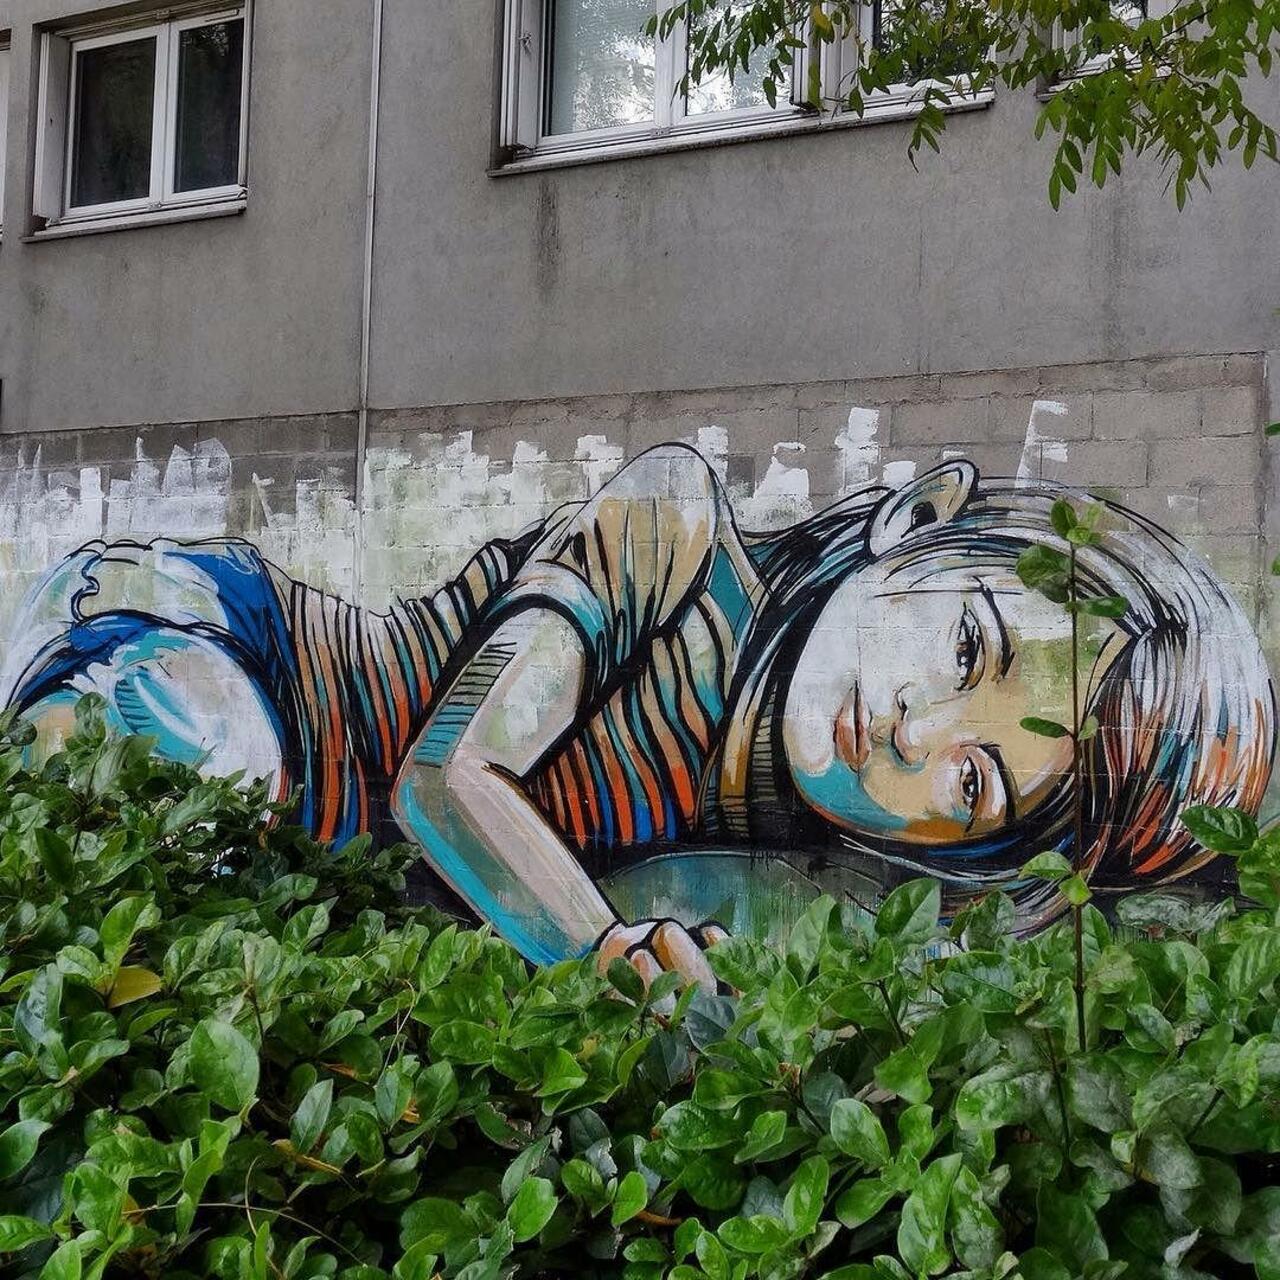 circumjacent_fr: #Paris #graffiti photo by plumms_ http://ift.tt/1OCAV9n #StreetArt https://t.co/pzQFvMuE1G